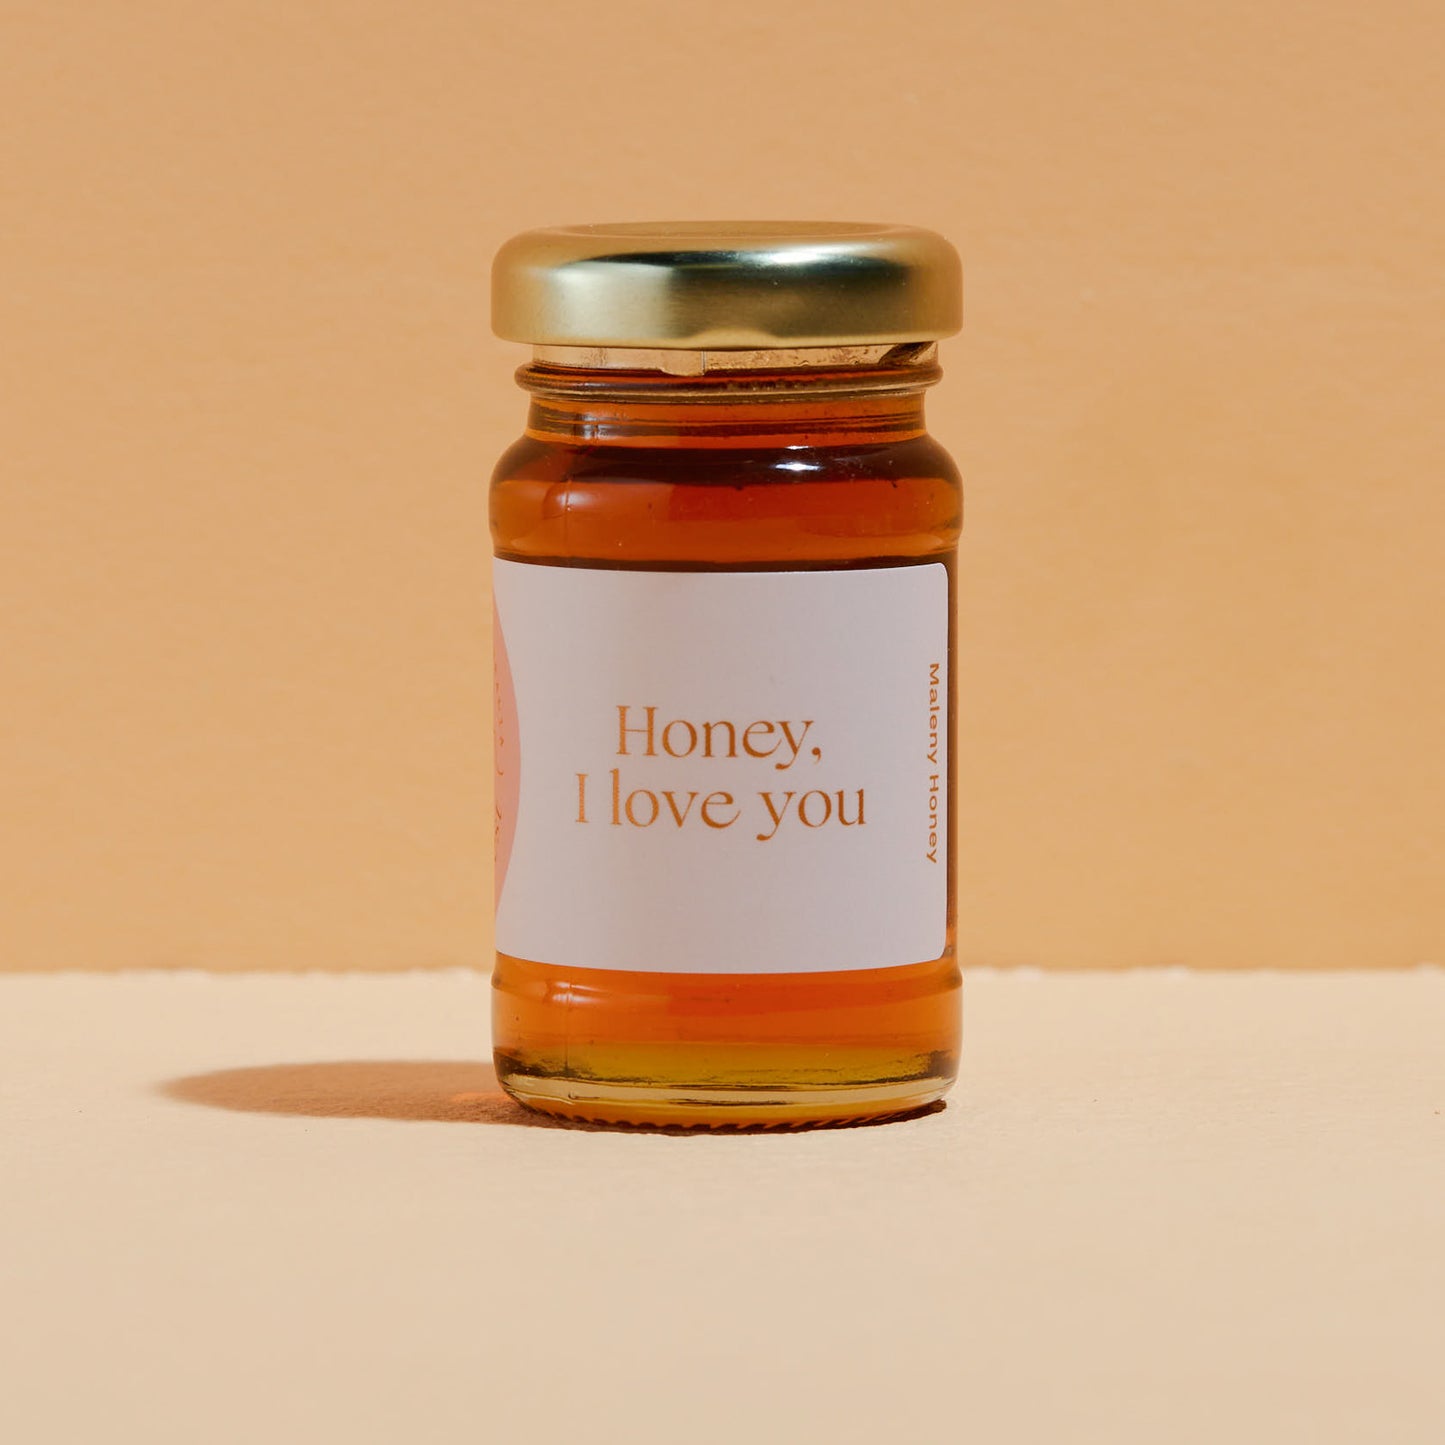 Maleny Honey Petite "Honey, I Love You"